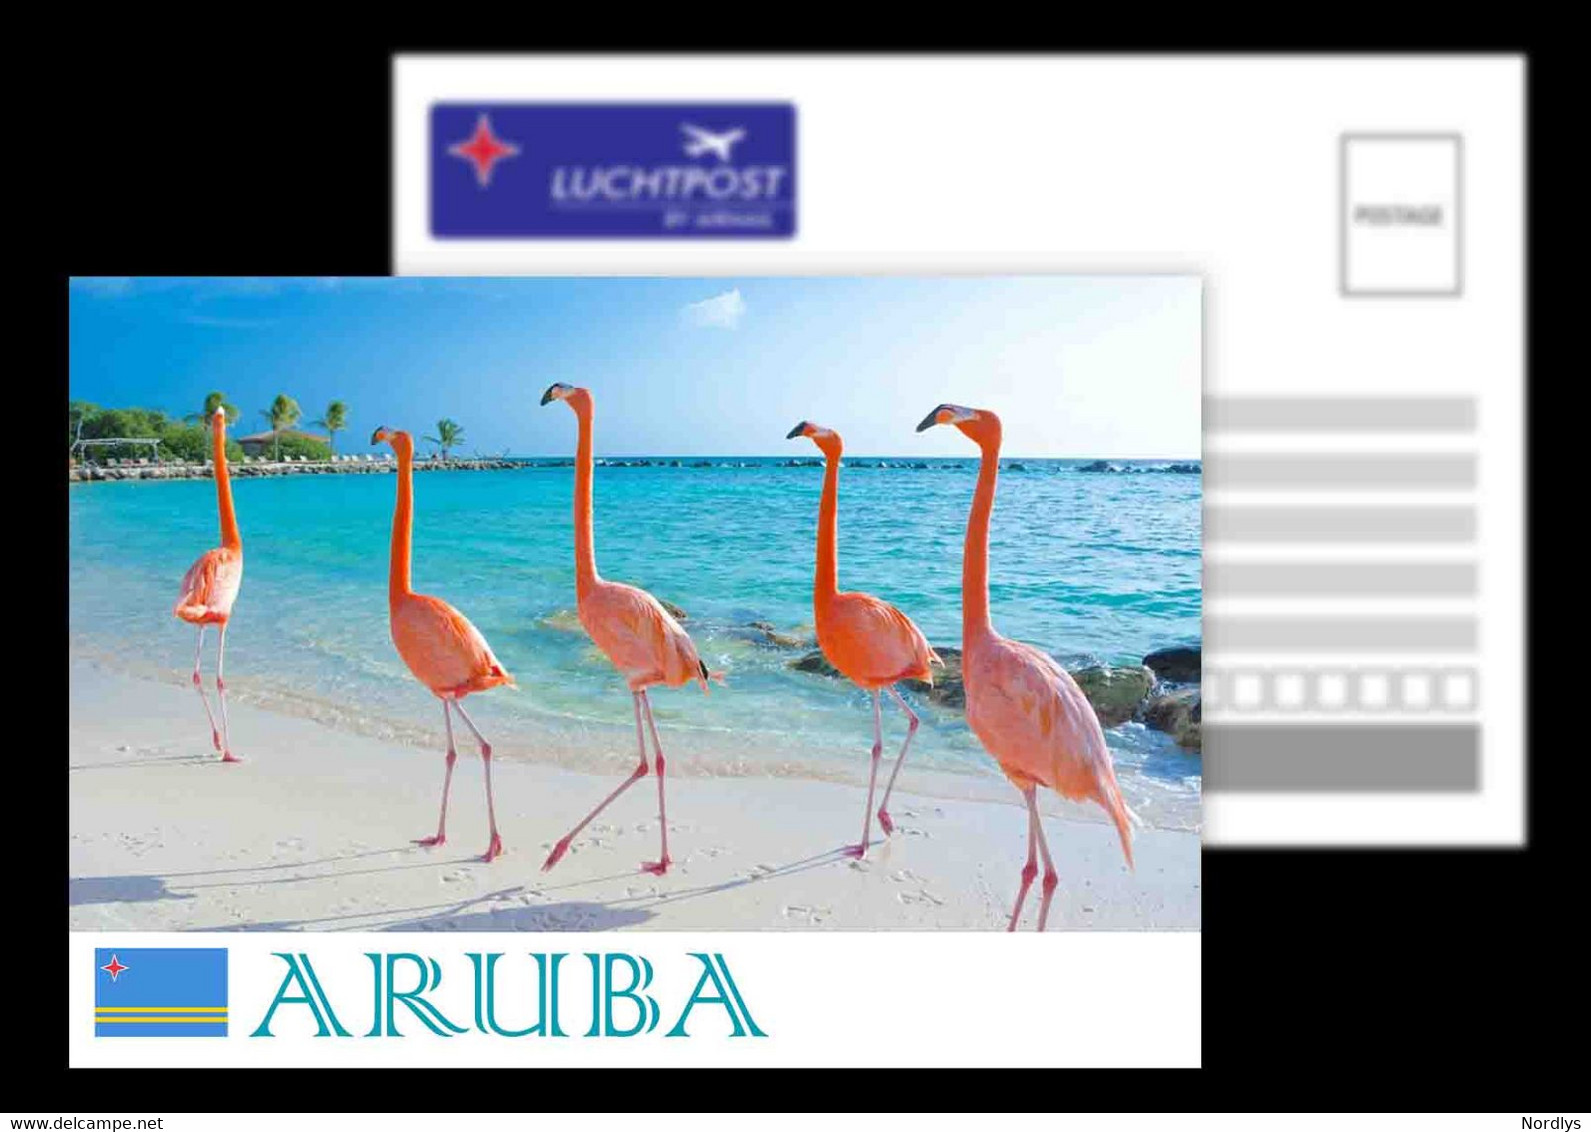 Aruba / Postcard / View Card - Aruba